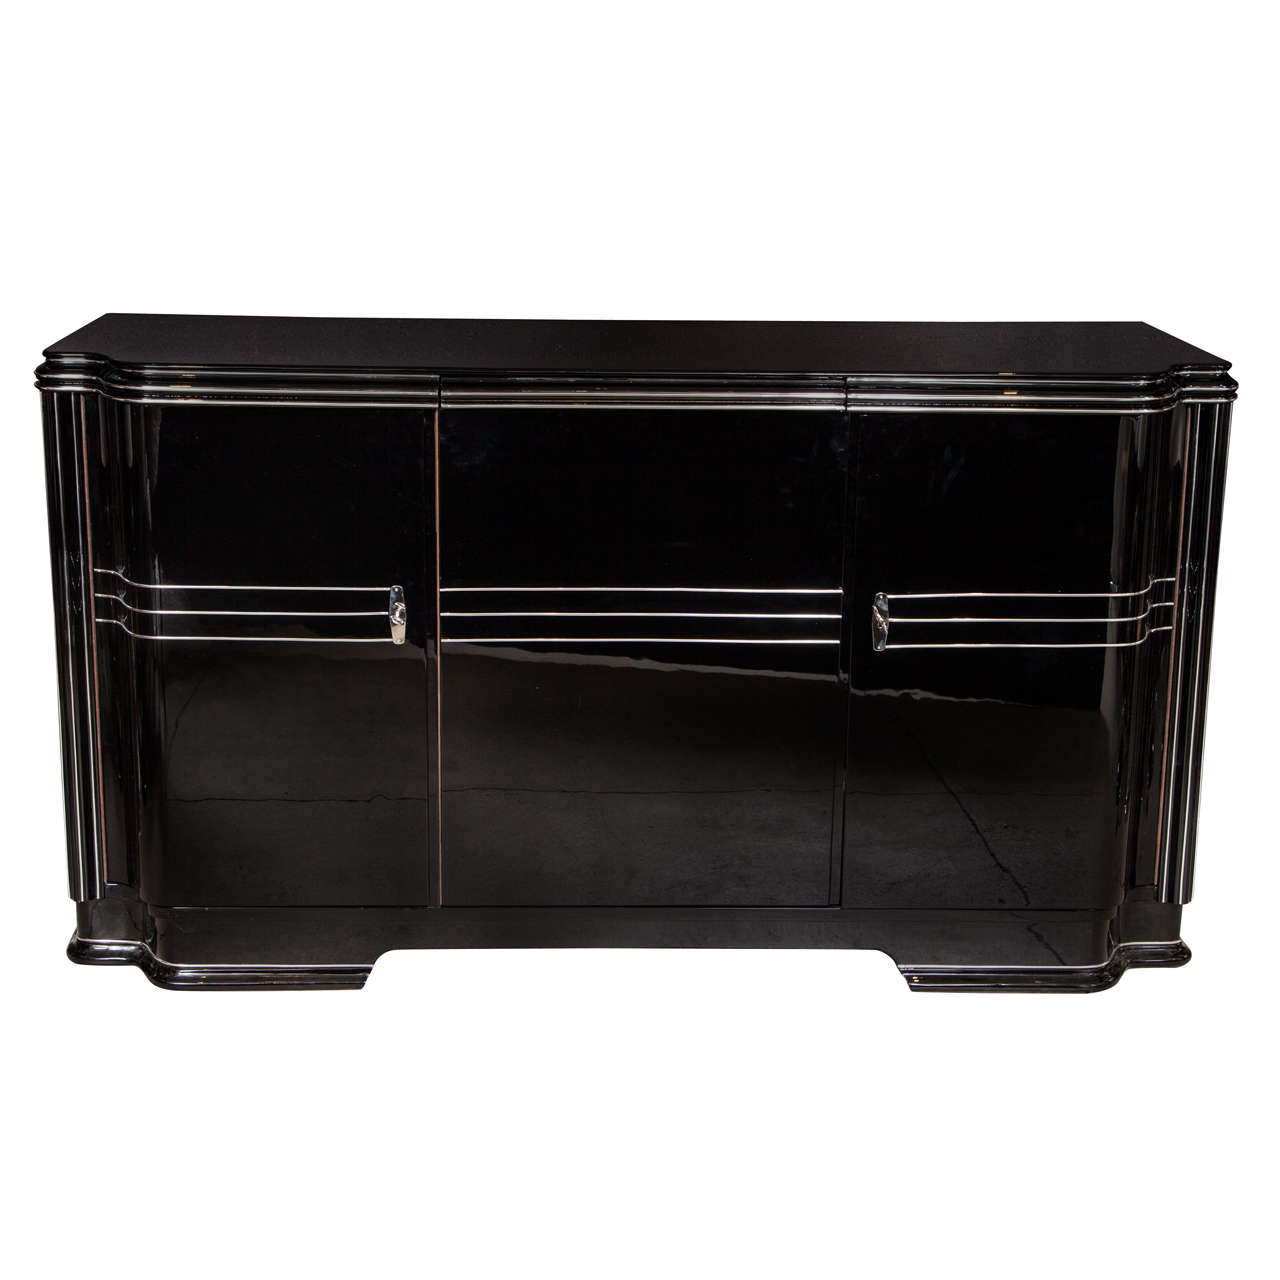 Black Piano Lacquered Art Deco Sideboard or Credenza